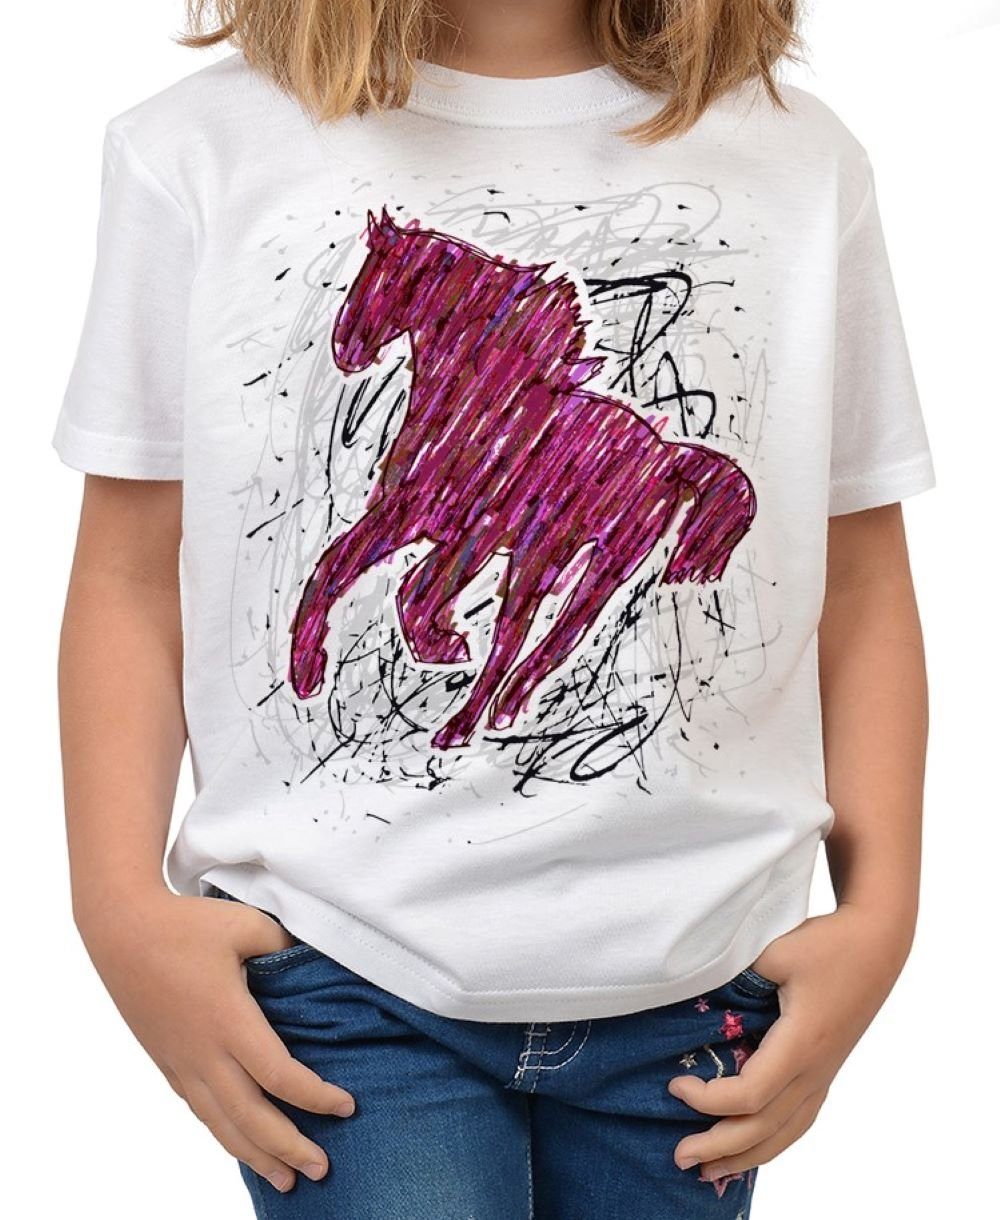 Kindershirt bunt, Pferd Pferde Shirt rosa - T-Shirt Kindershirt Shirts Motiv Zeichnung Pferde Tini :